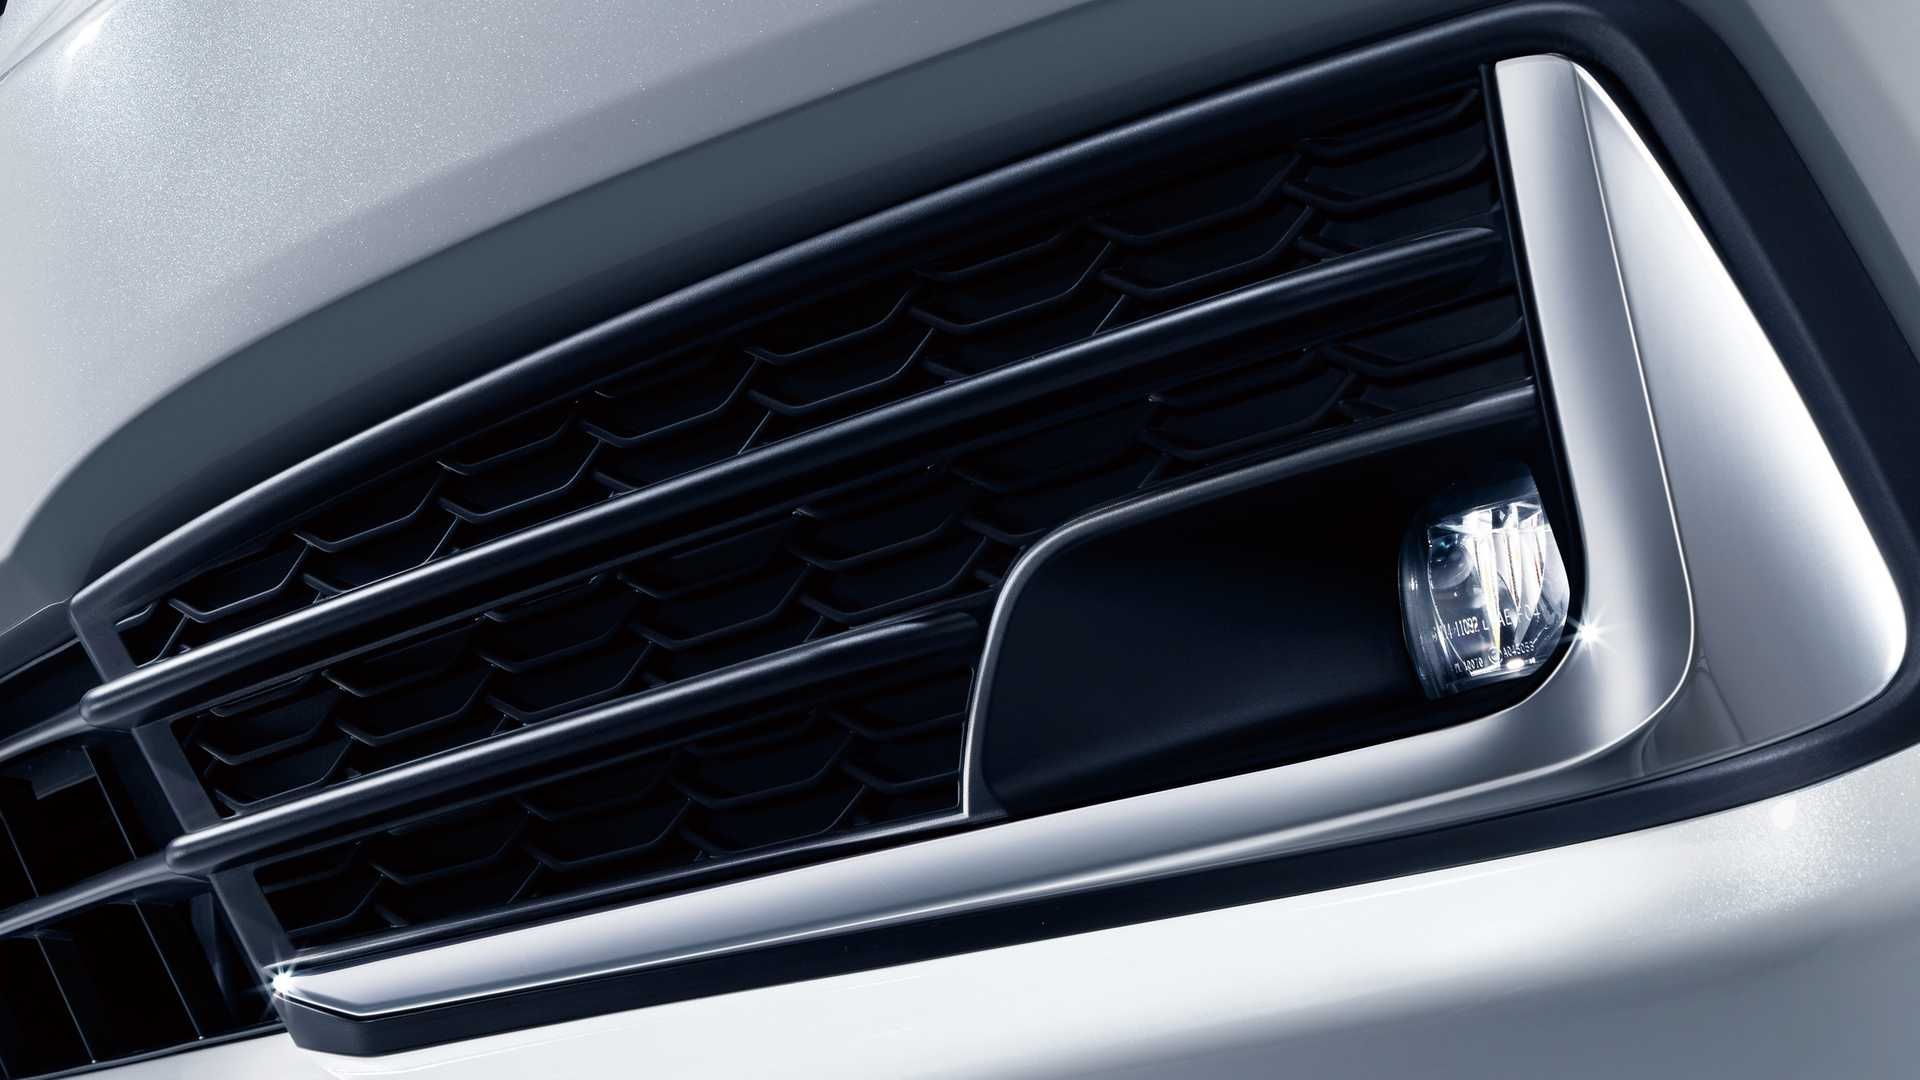 2020 Subaru Impreza / سوبارو ایمپرزا 2020